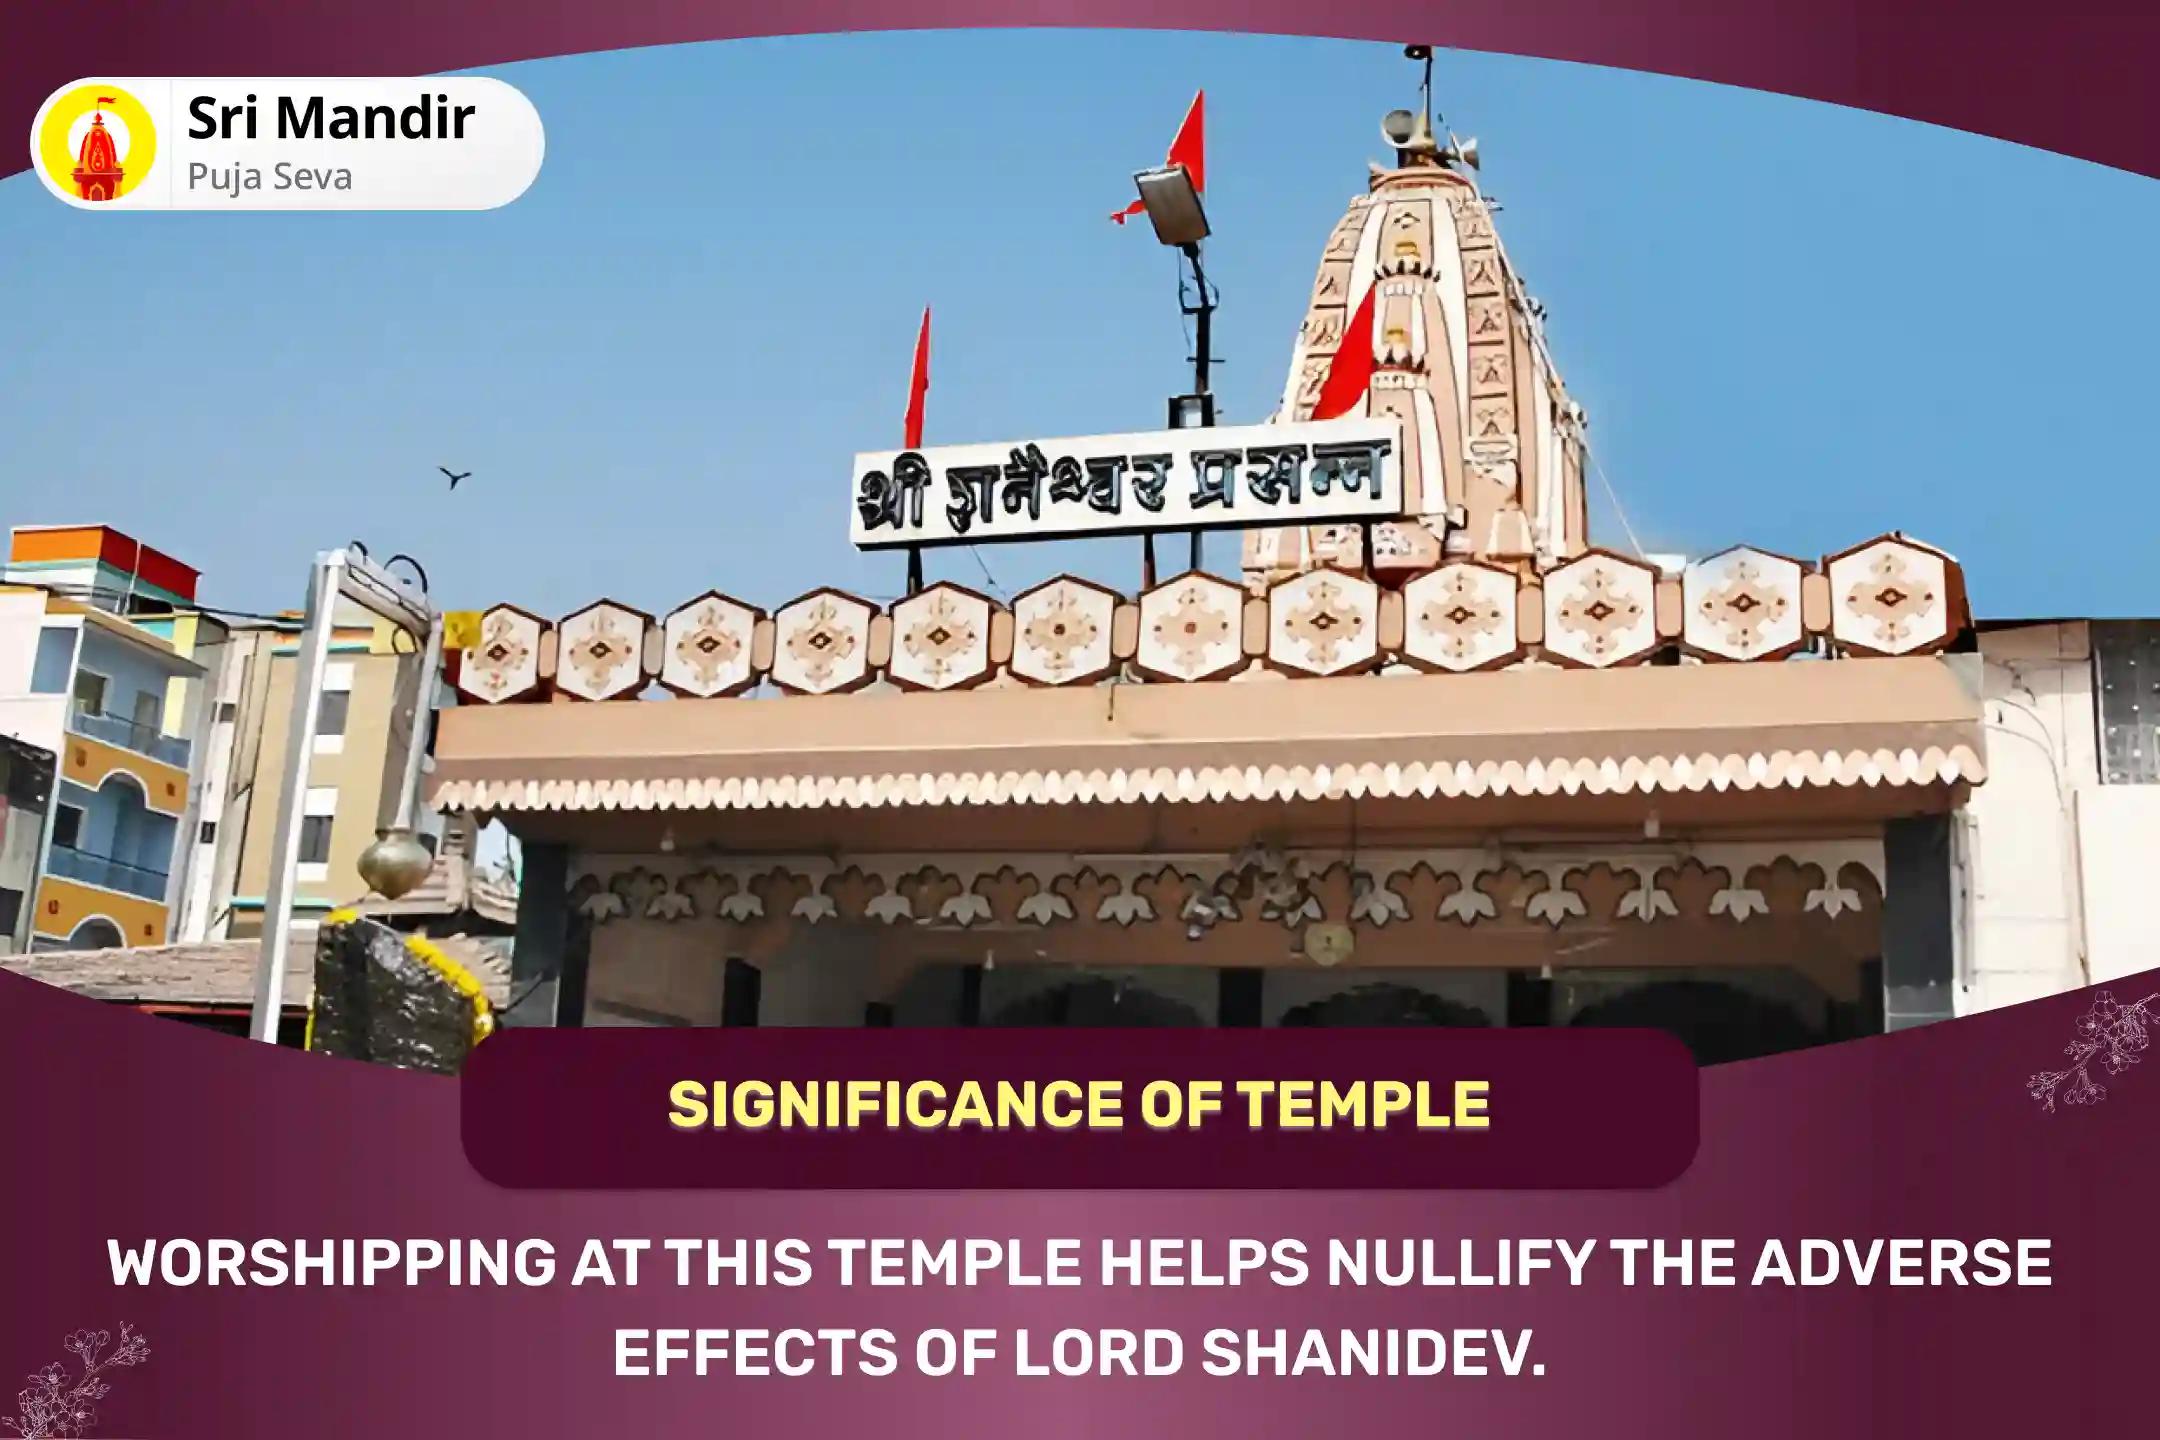 World’s Biggest Shani Temple Special Shani Til Tel Abhishek and Saade Saati Peeda Shanti Mahapuja for Overcoming Challenges and Adversities in Life